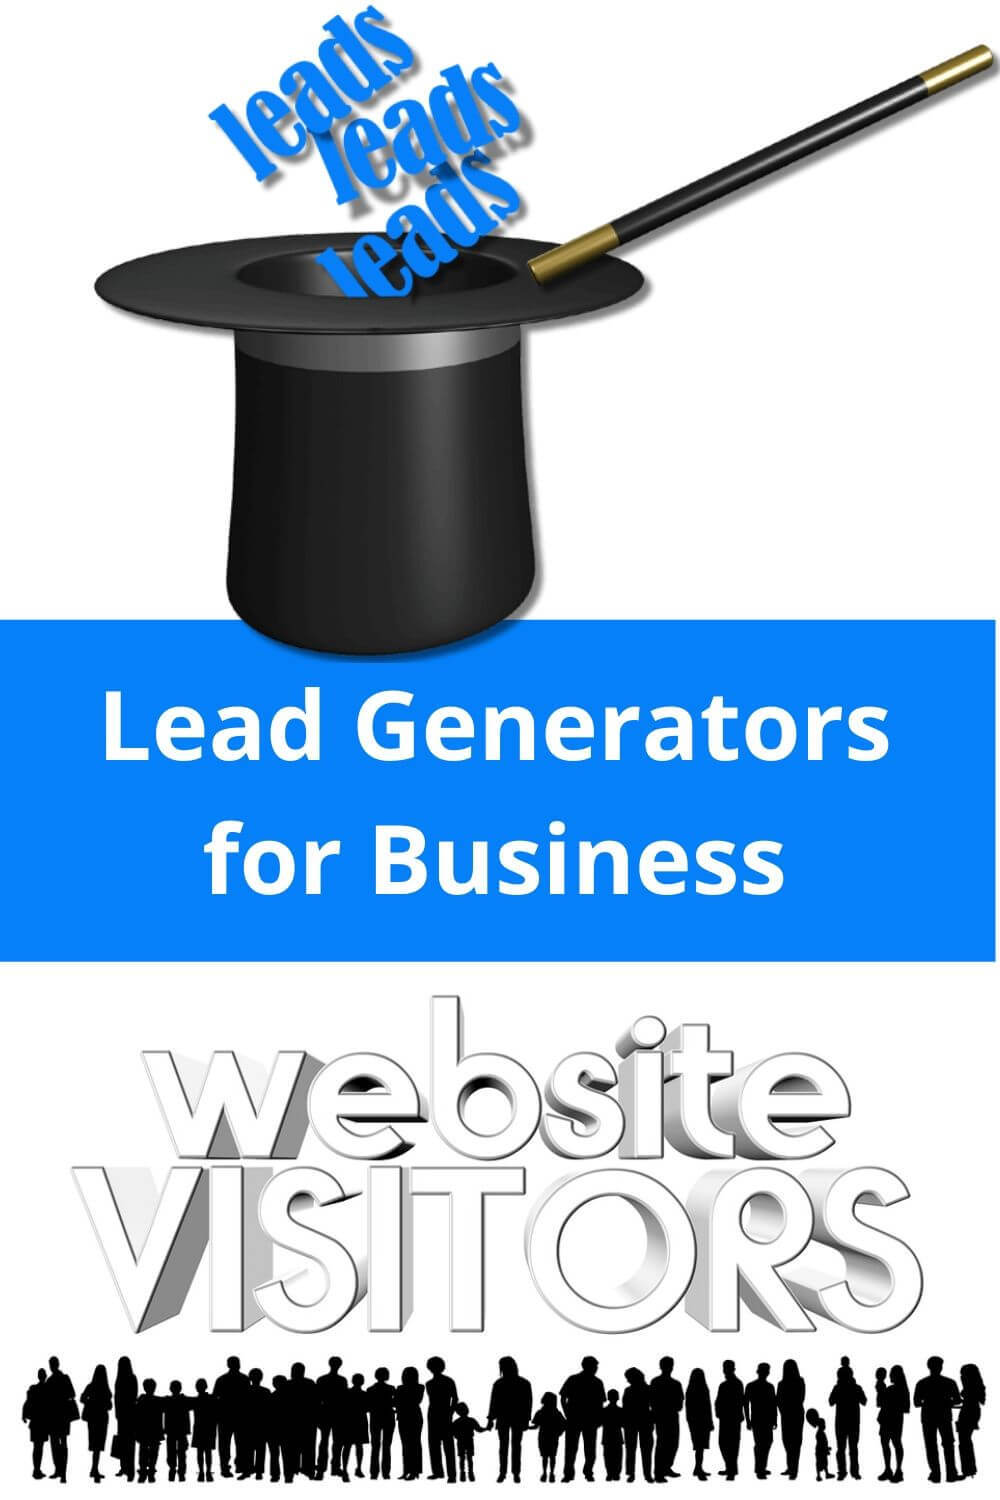 Lead Generators for Business